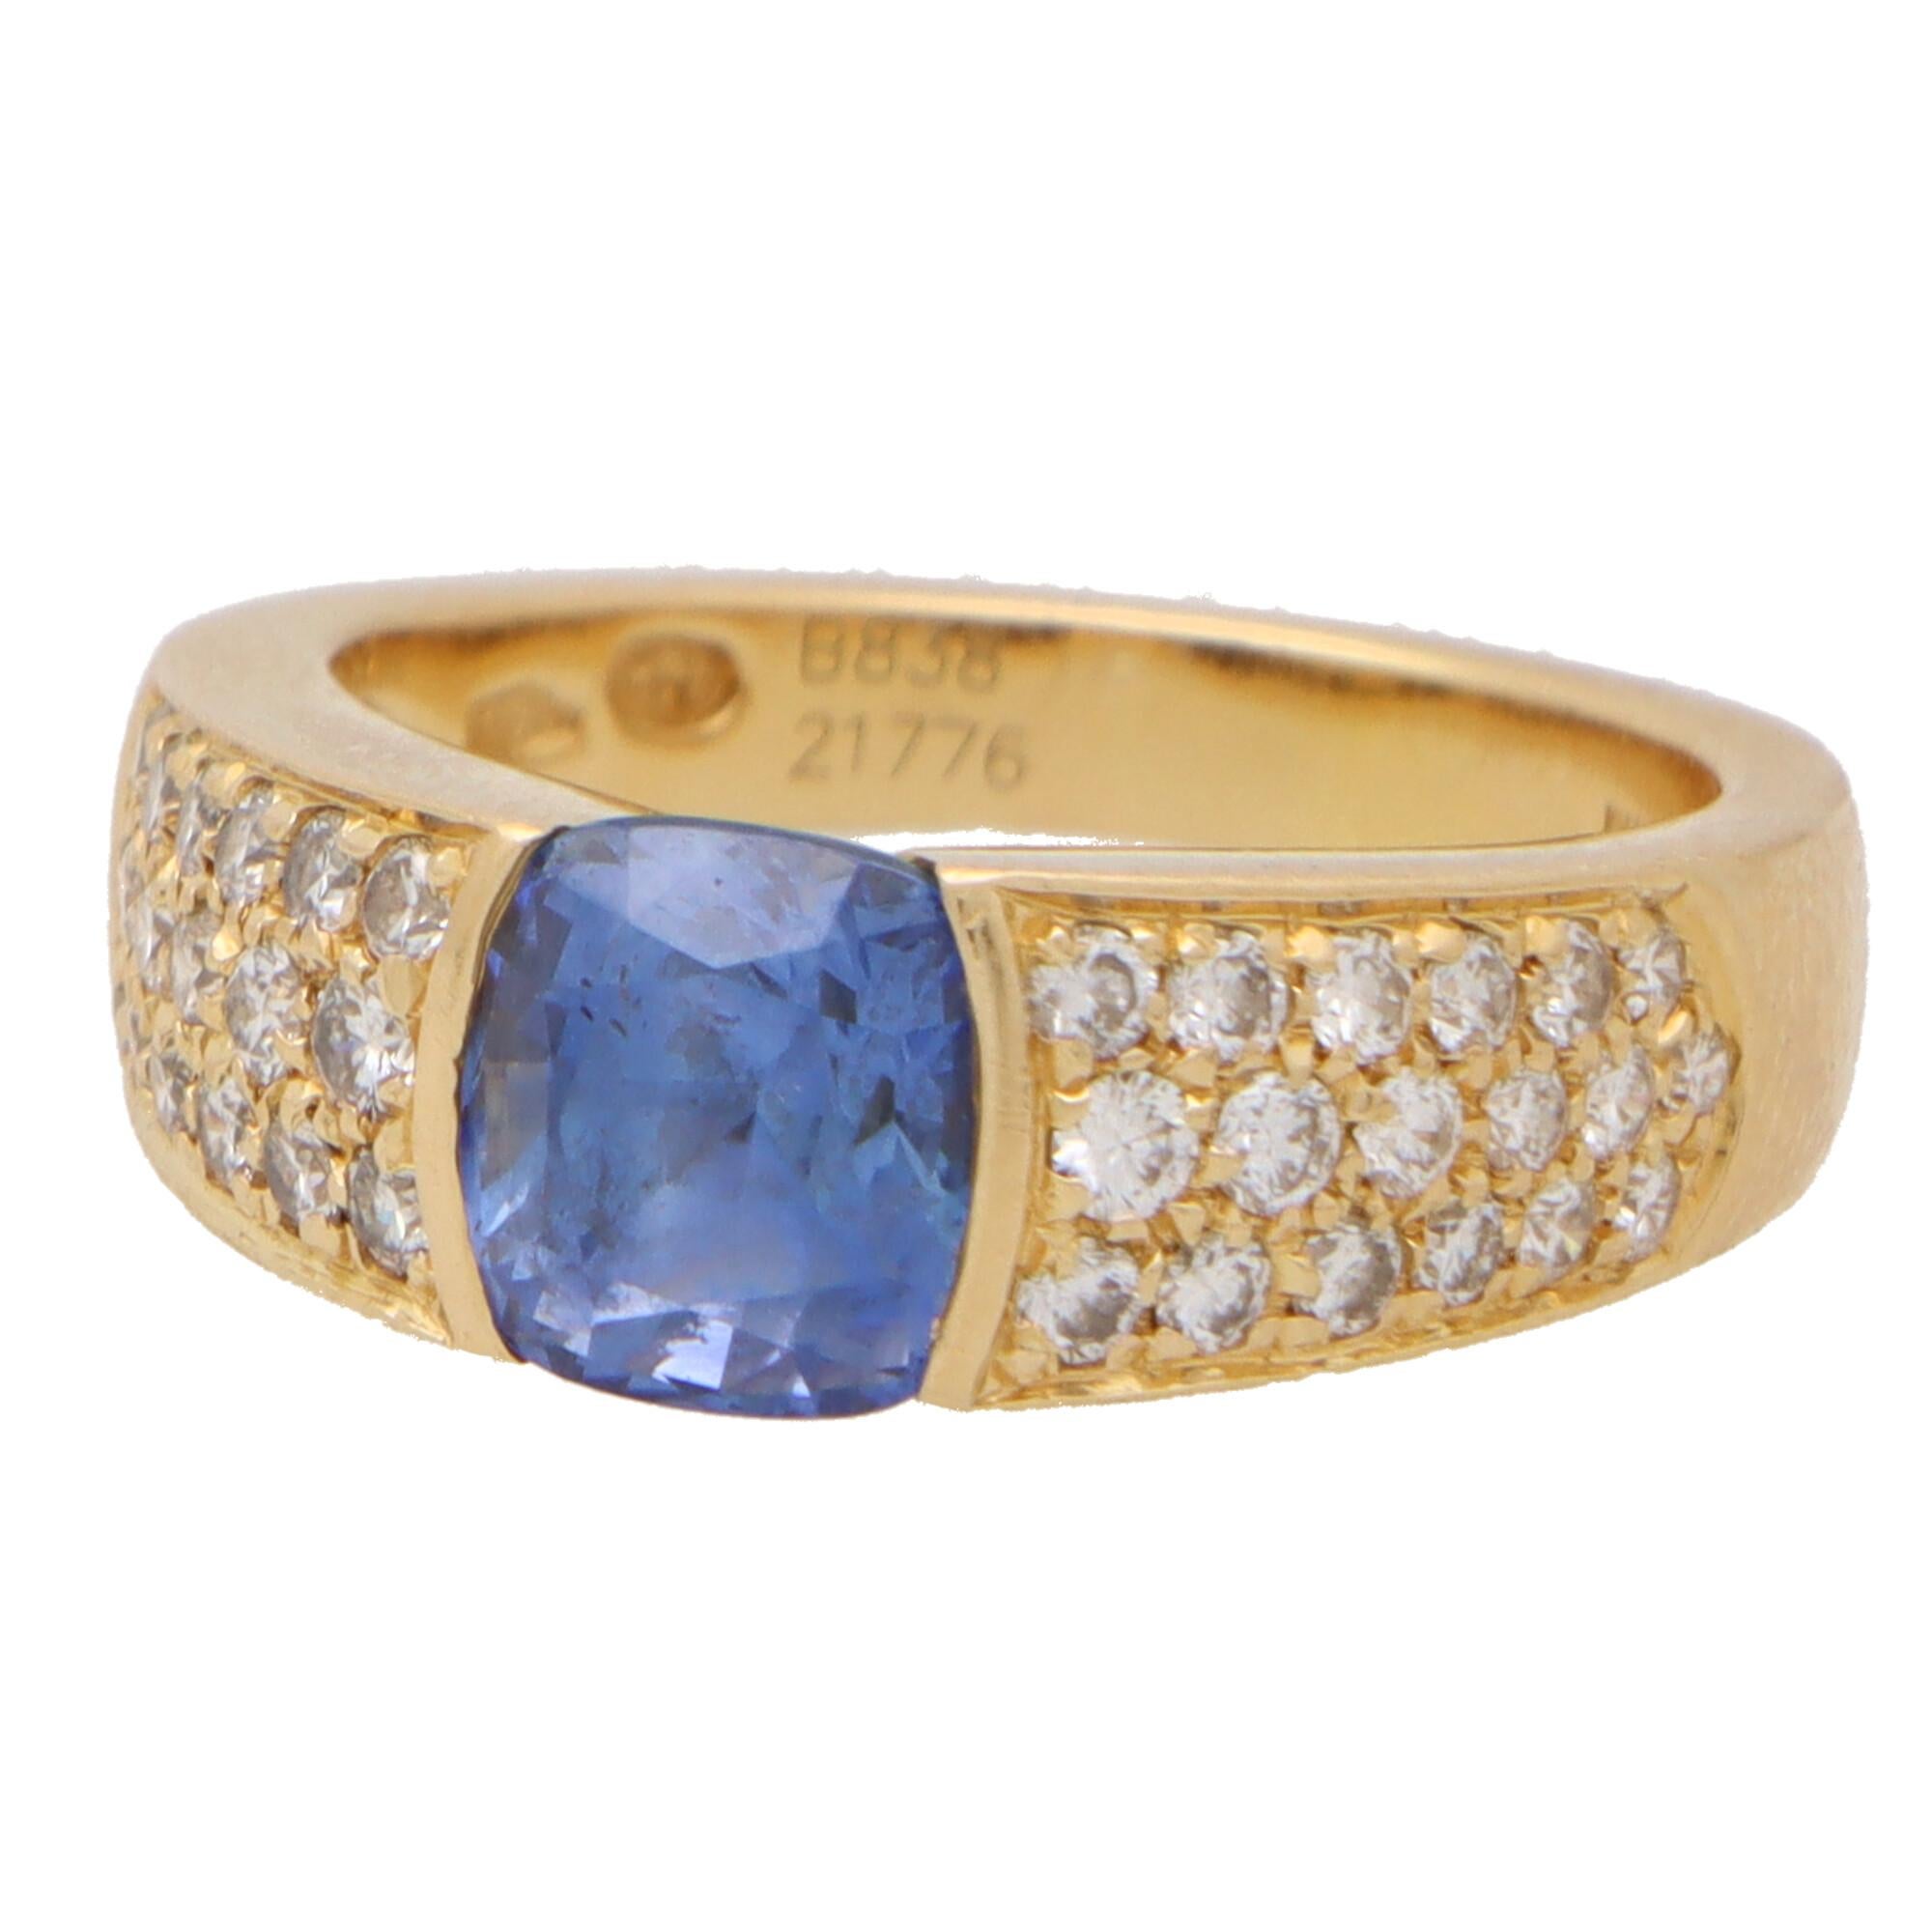 Modern Vintage Boucheron Diamond and Sapphire Bombé Ring Set in 18k Yellow Gold